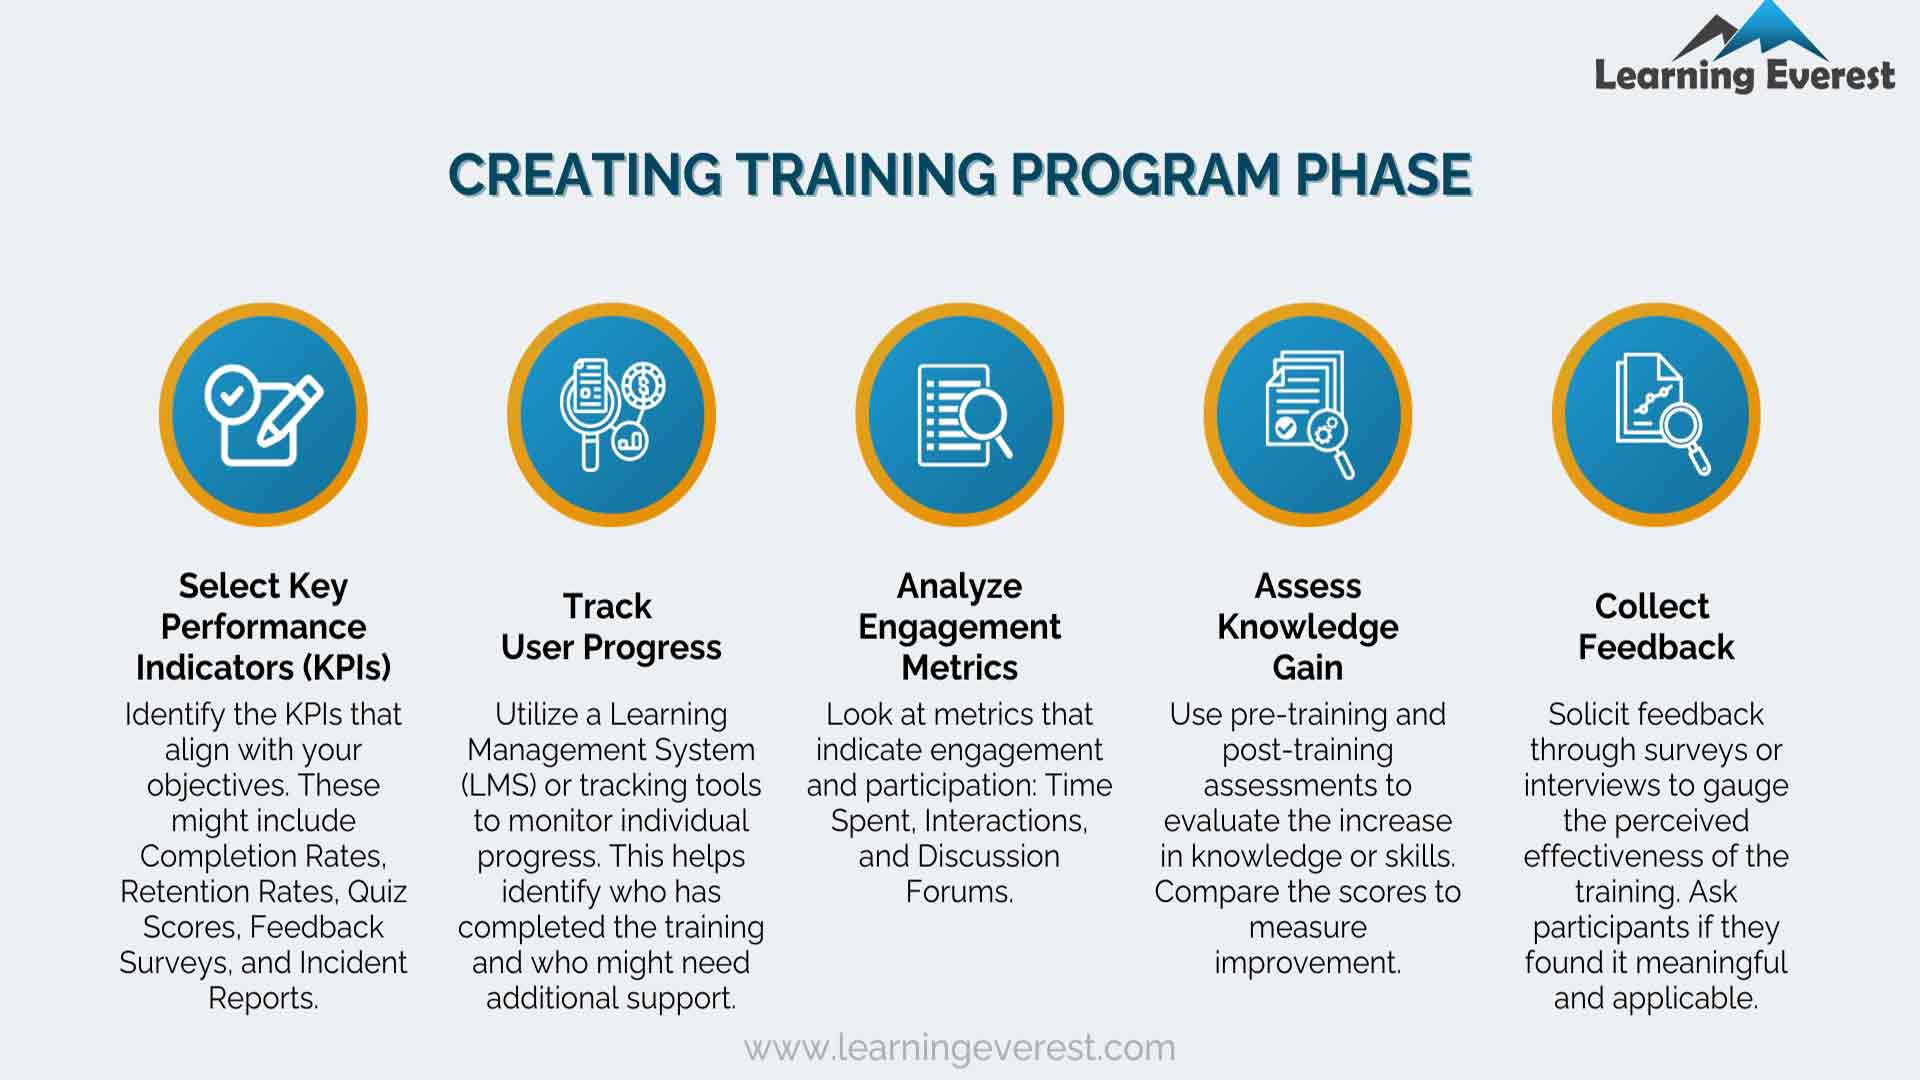 Online safety training programs- Measure meaningful engagement metrics